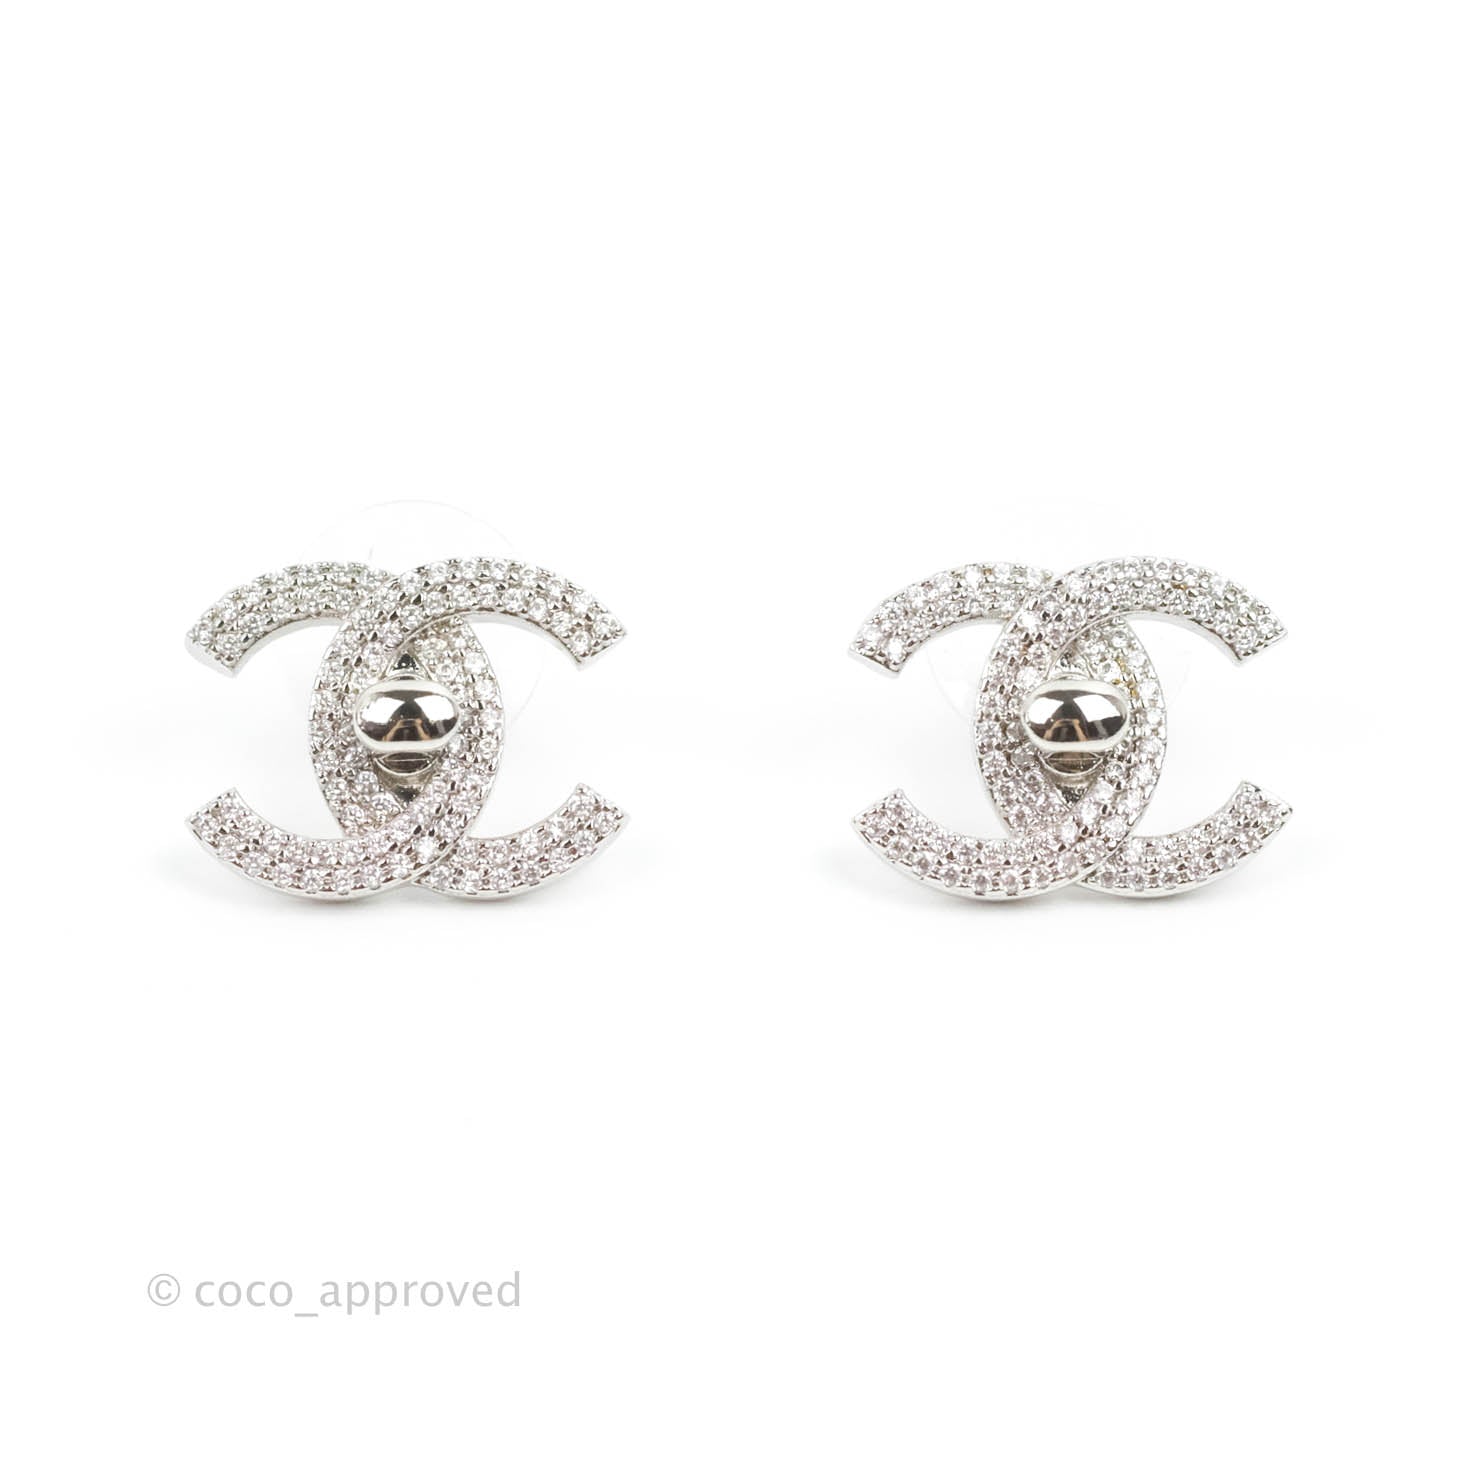 Chanel CC Turn Lock Earrings Silver Tone 22B – Coco Approved Studio